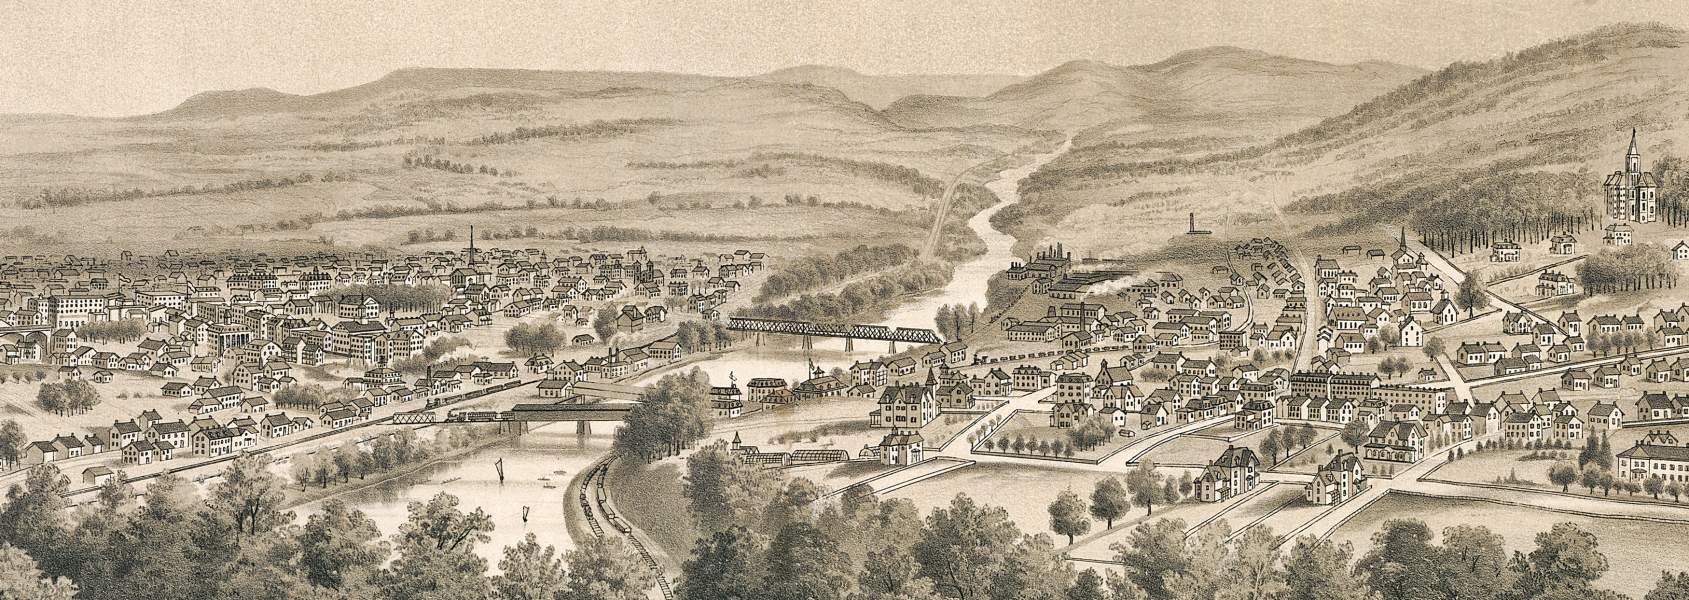 Bethlehem, Pennsylvania, 1877, bird's-eye view, detail, zoomable image